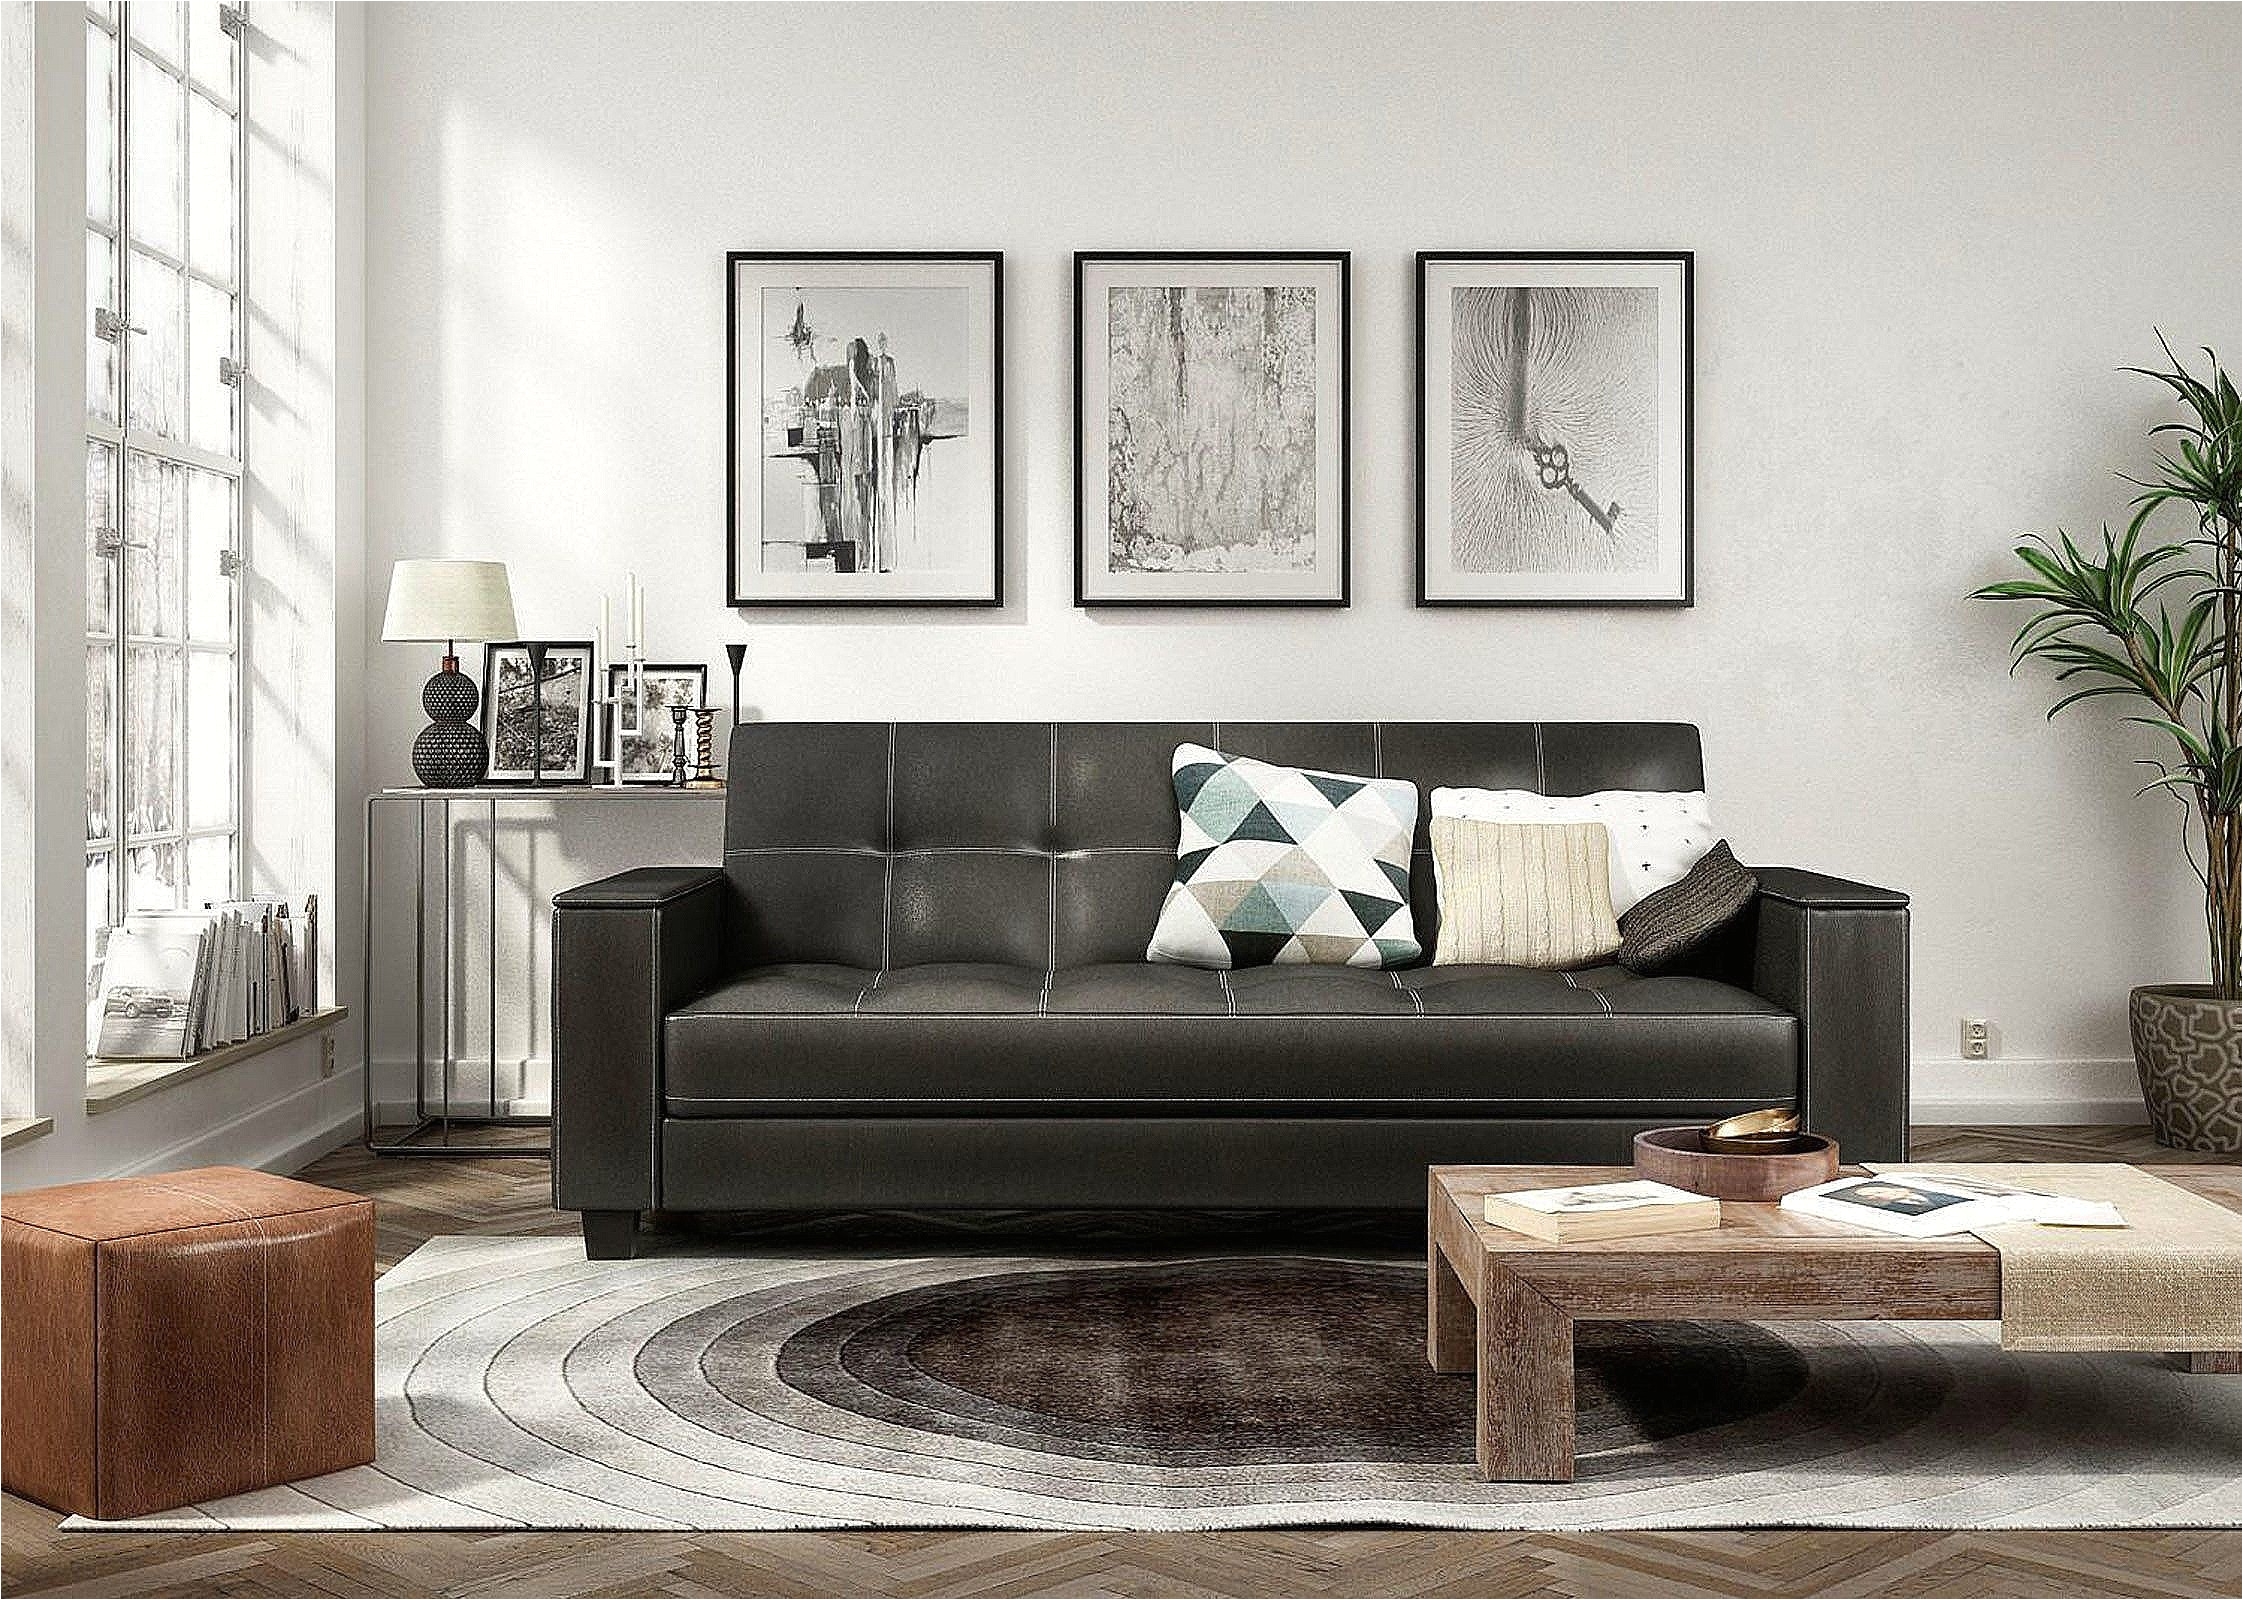 living room couch ideas very best modern living room furniture new gunstige sofa macys furniture 0d